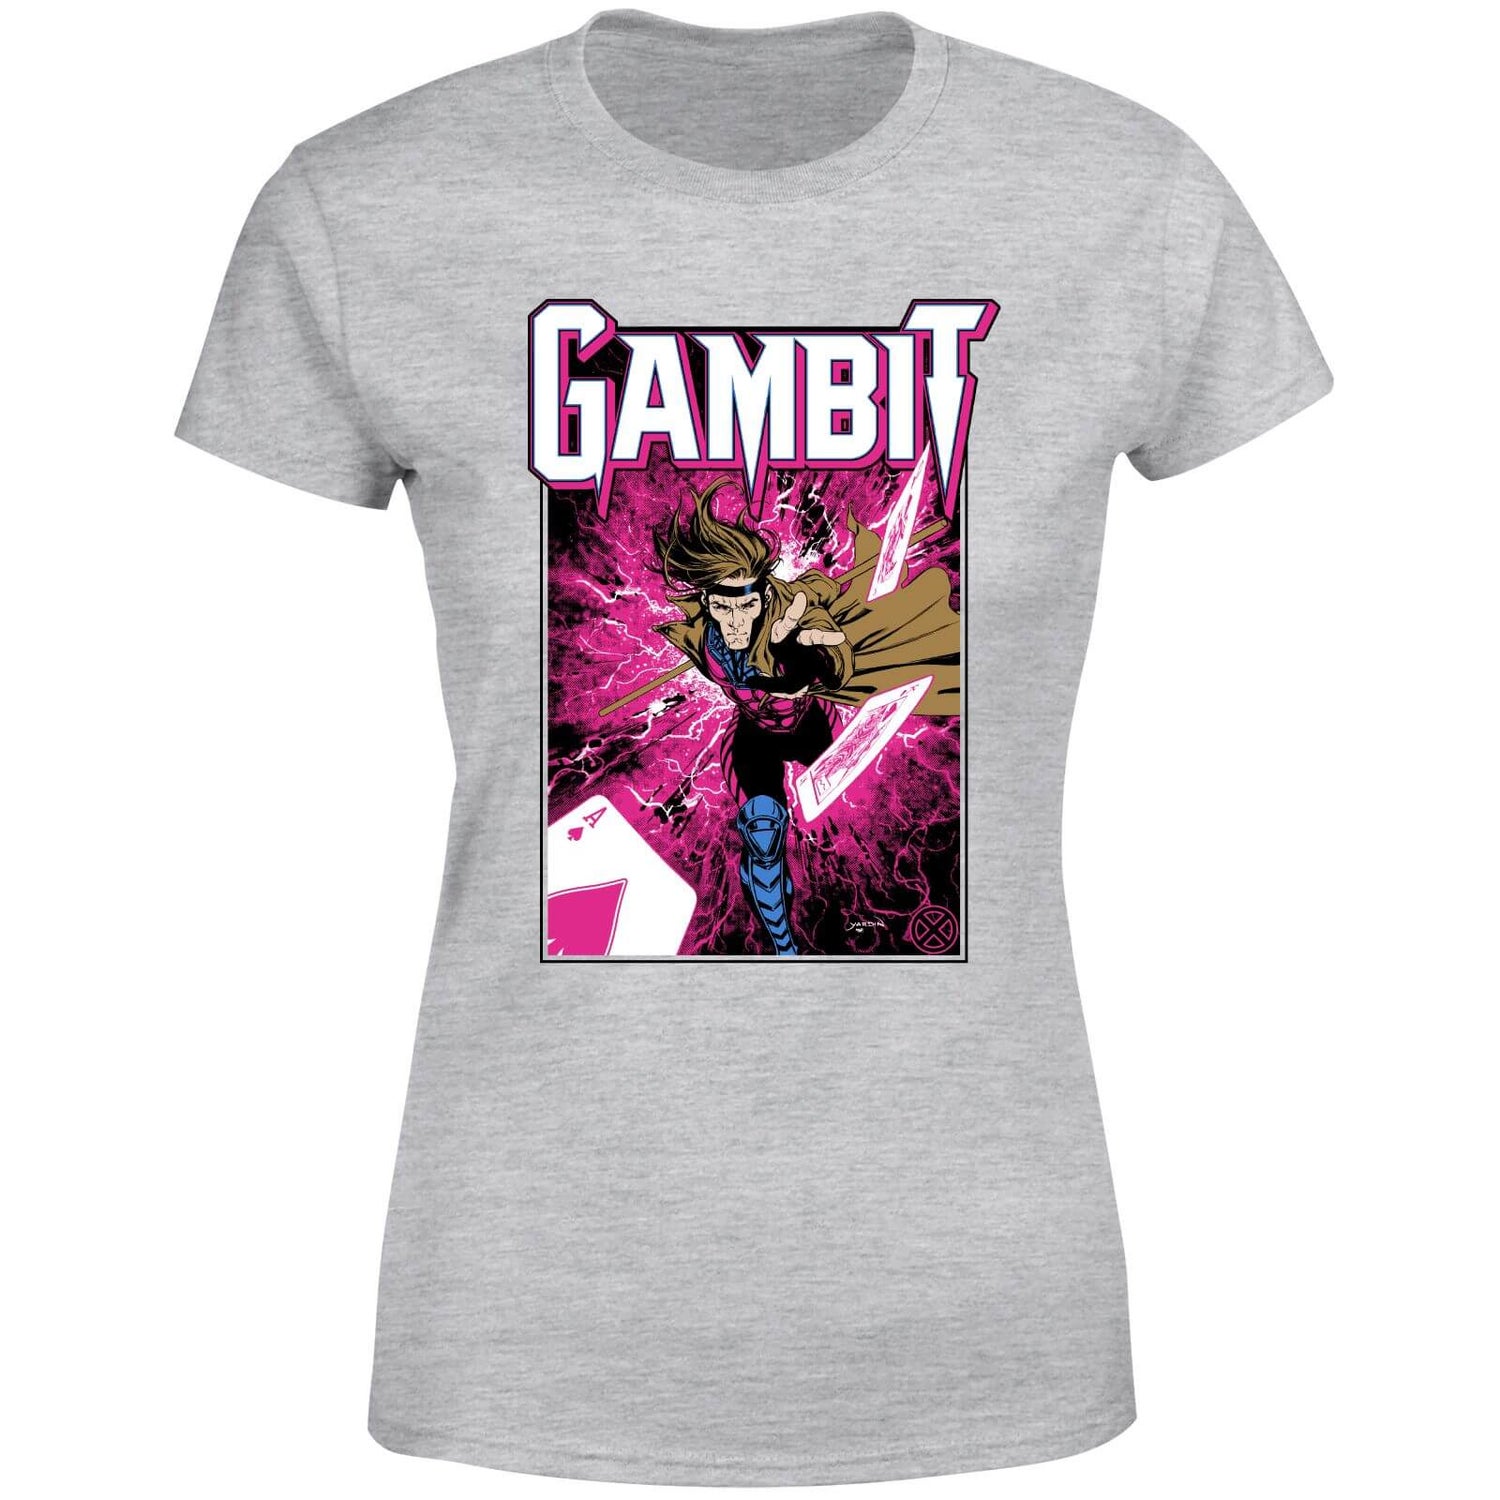 X-Men Gambit Women's T-Shirt - Grey